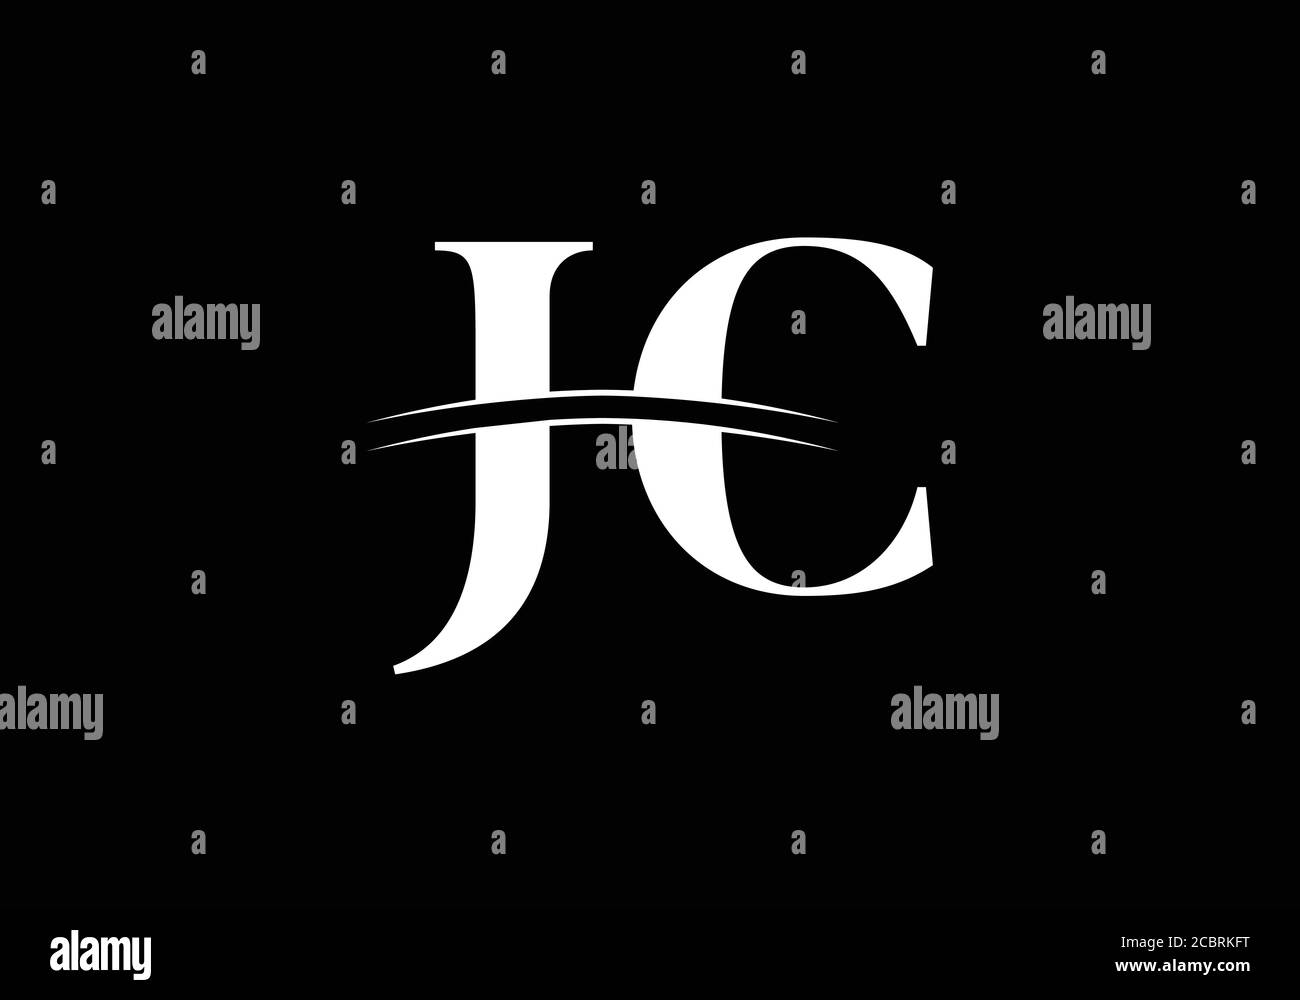 J C Initial Letter Logo design, Graphic Alphabet Symbol for Corporate Business Identity Stock Vector